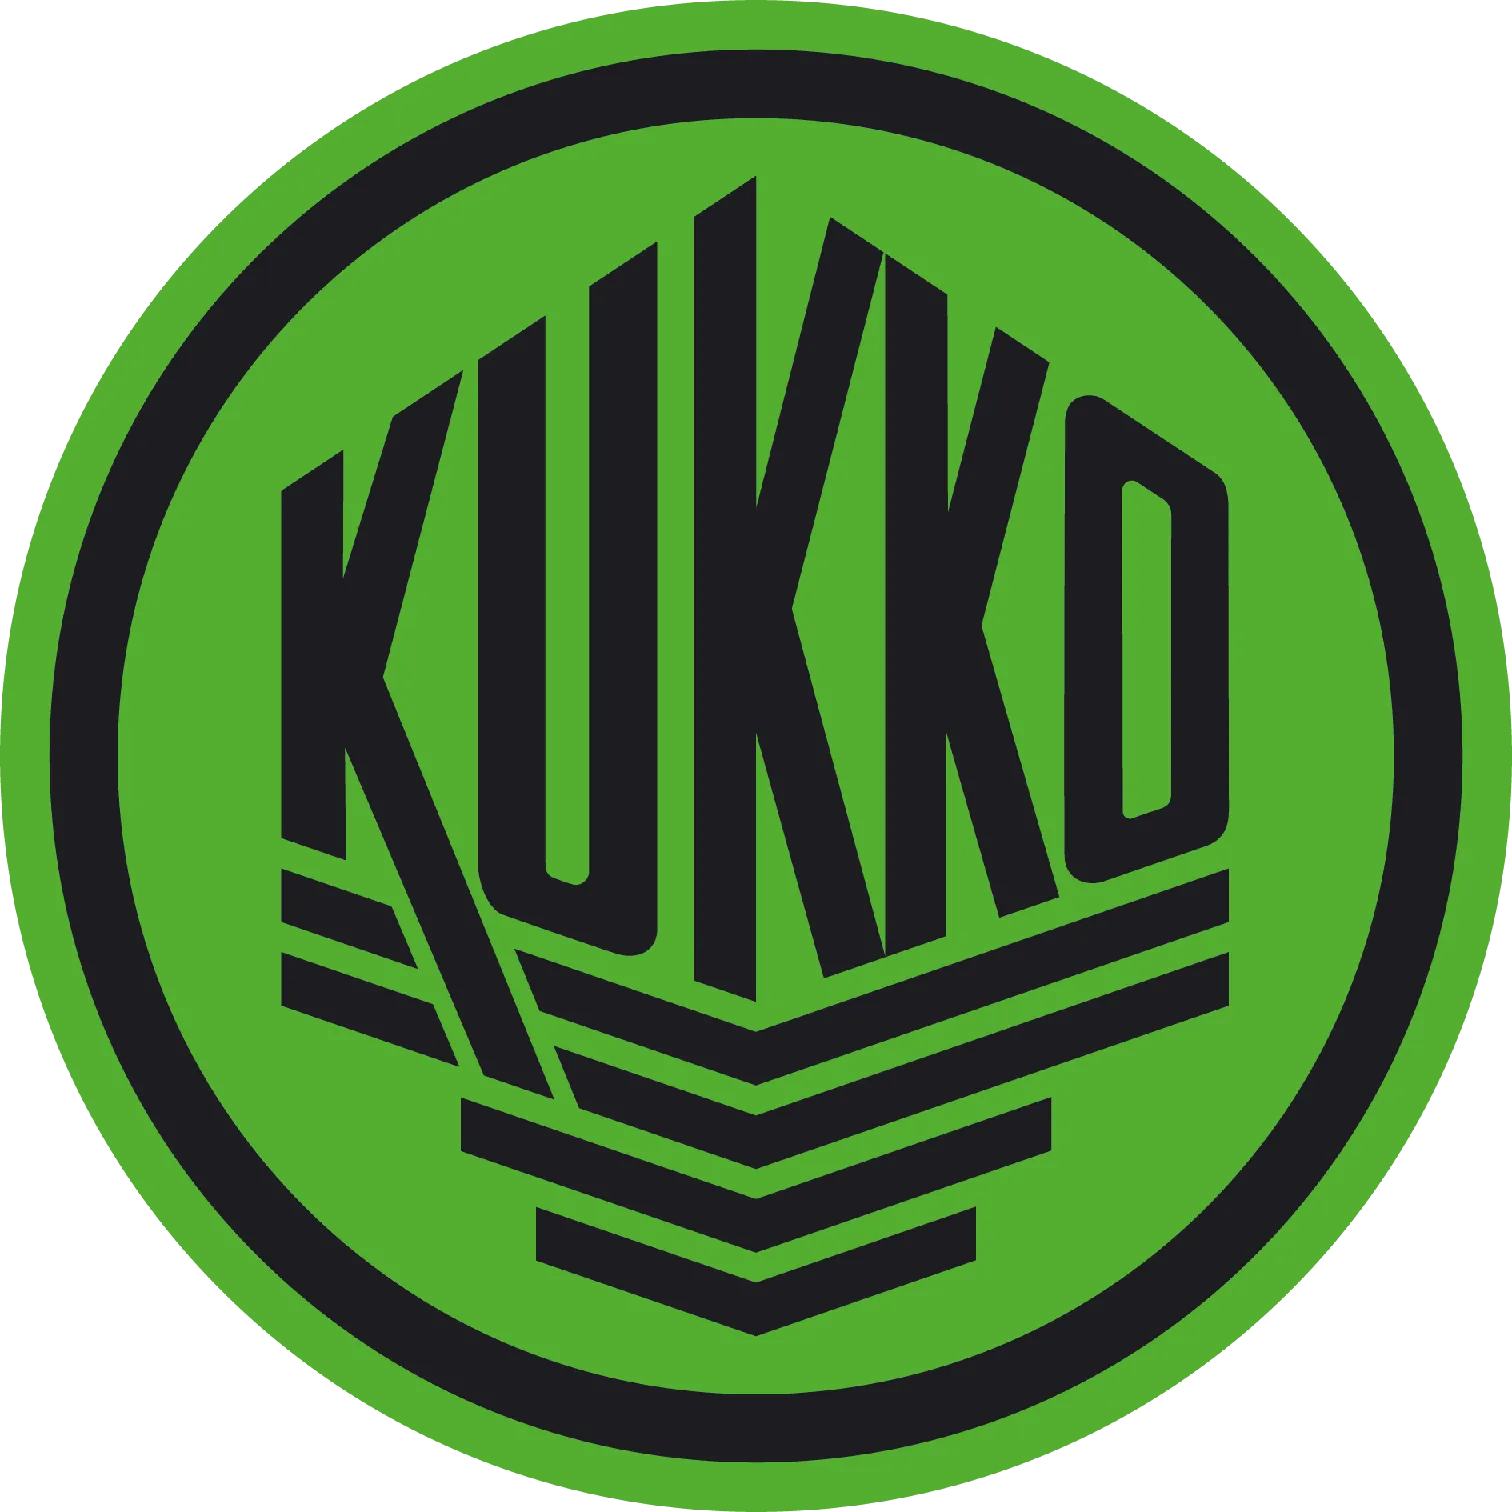 Kukko logo